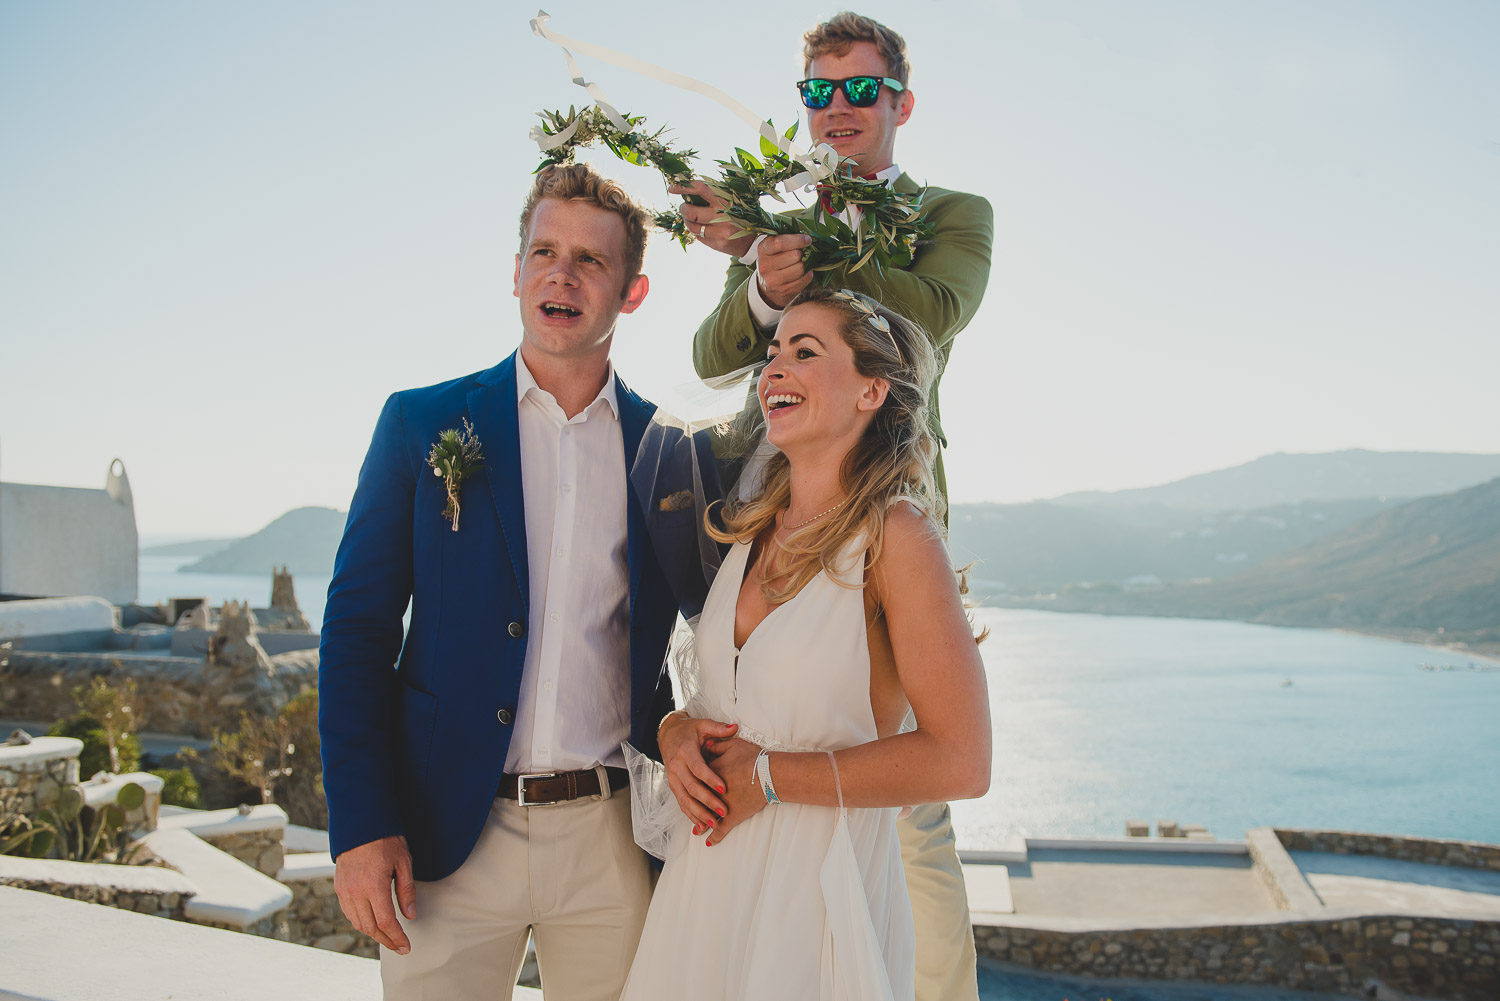 Wedding photographer Mykonos: best man holds olive branch wedding crowns above couple's heads during  Mykonos wedding.